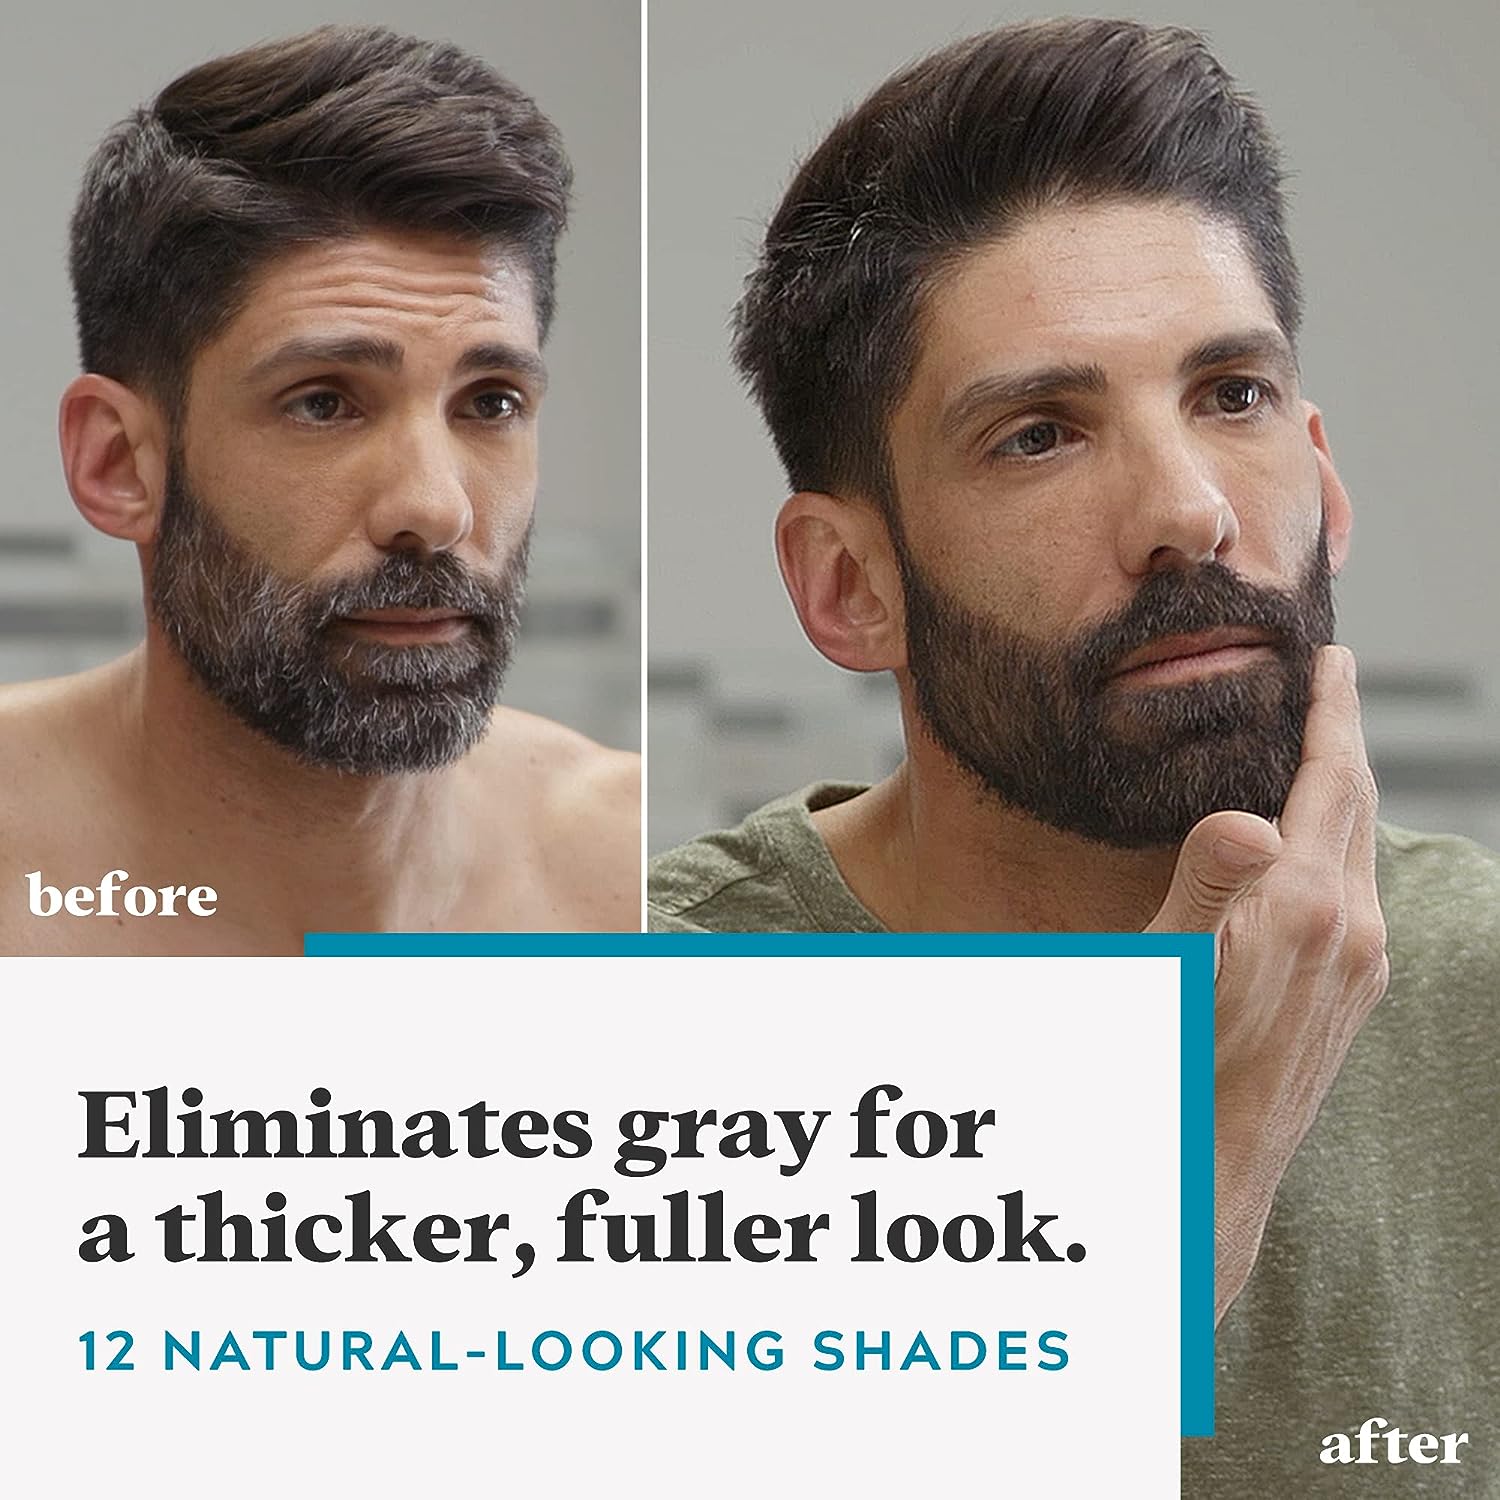 Just For Men Mustache & Beard Coloring for Gray Hair, M40 Medium Dark Brown - image 3 of 8